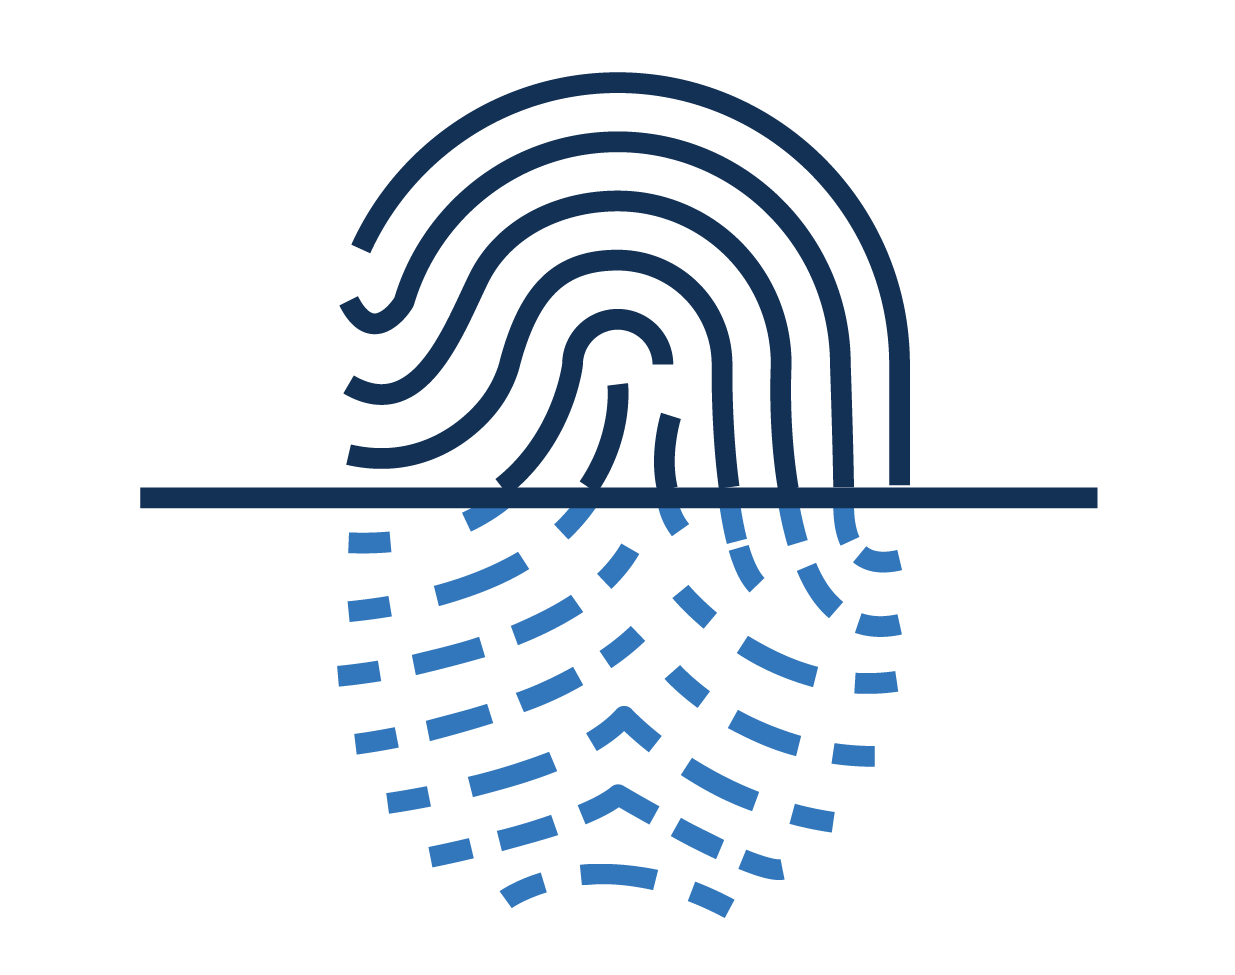 An icon representing digital fingerprinting, a capability of the Nfusion virtual desktop environment.